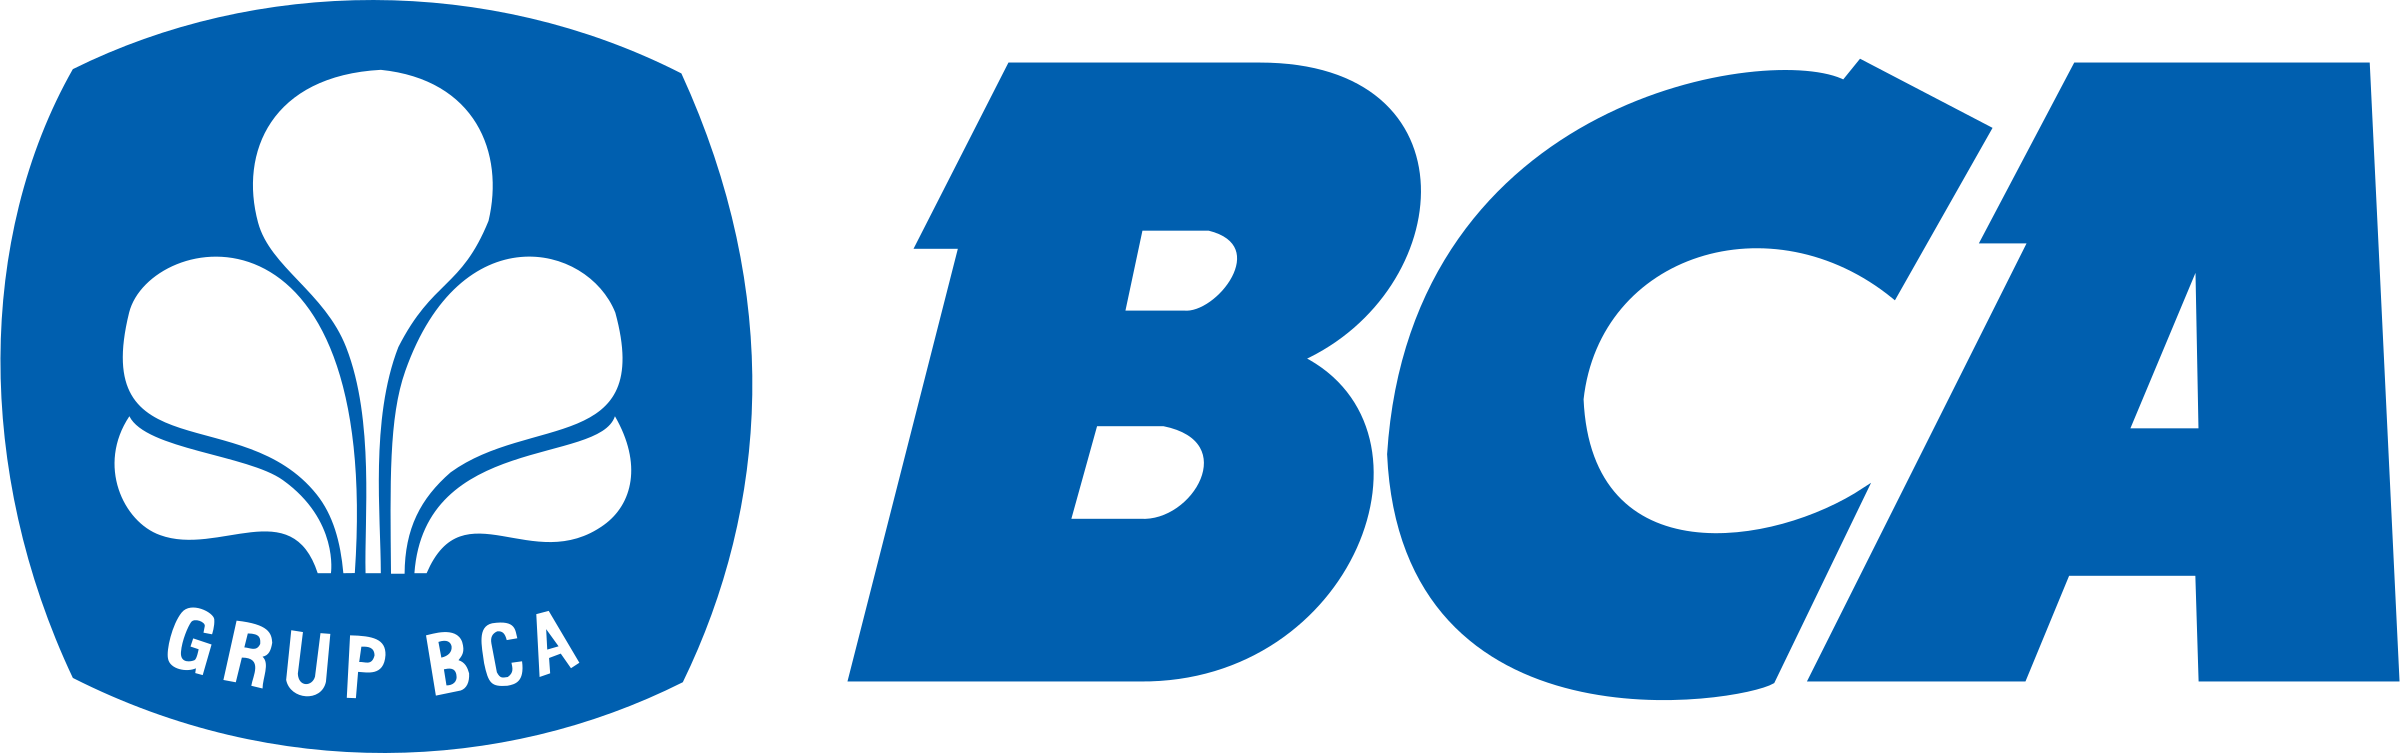 Blue Asia Logo - BCA Bank Central Asia Logo SVG Vector & PNG Transparent